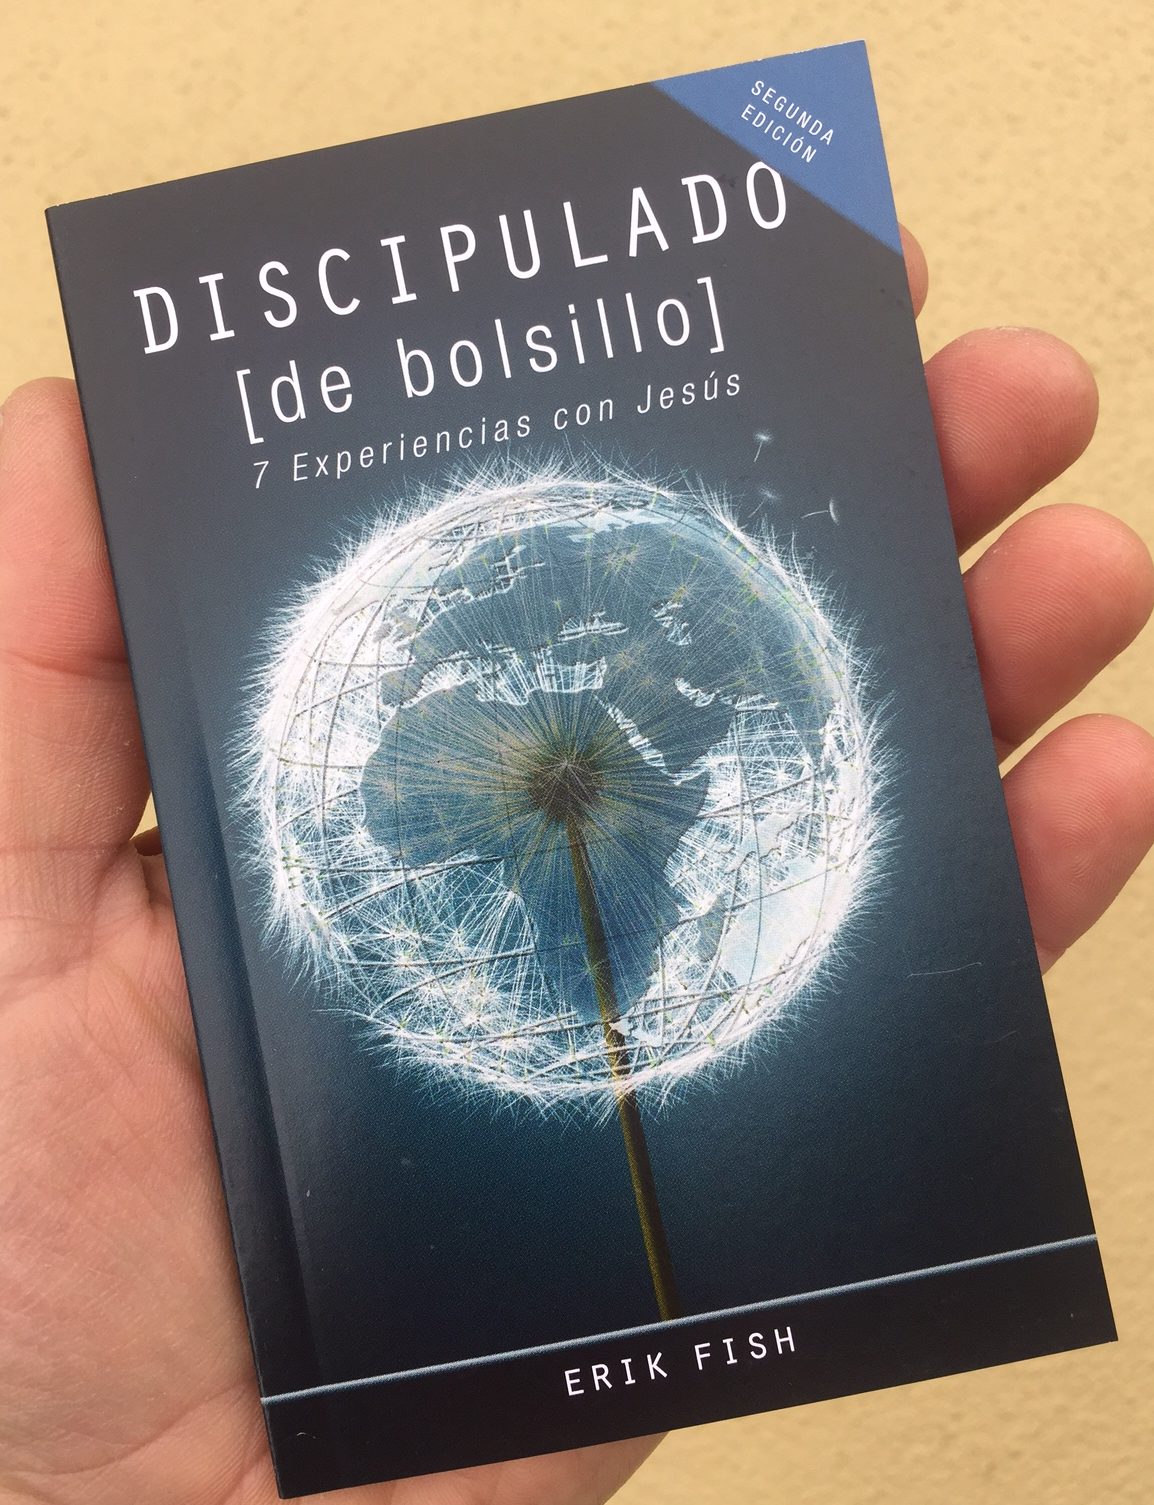 Spanish Discipleship Books!  Discipulado de Bolsillo is here!